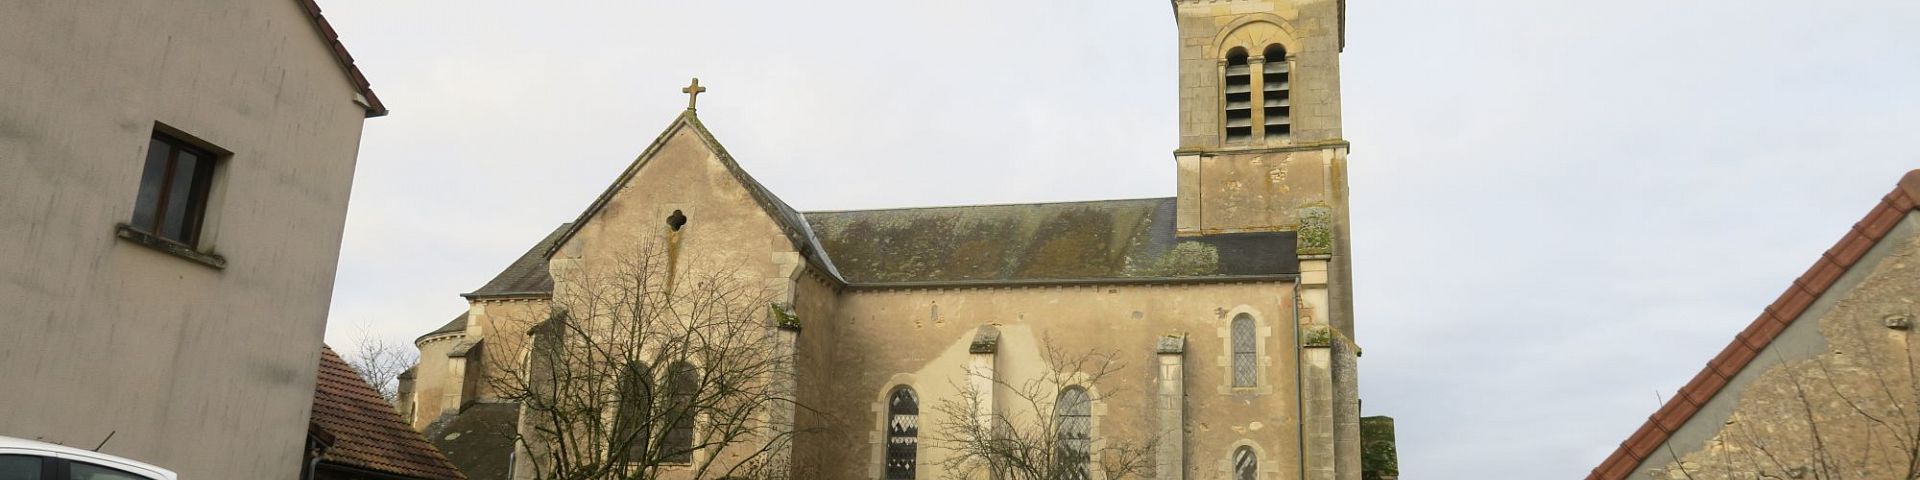 Taconnay - Eglise Saint-Fiacre (58)